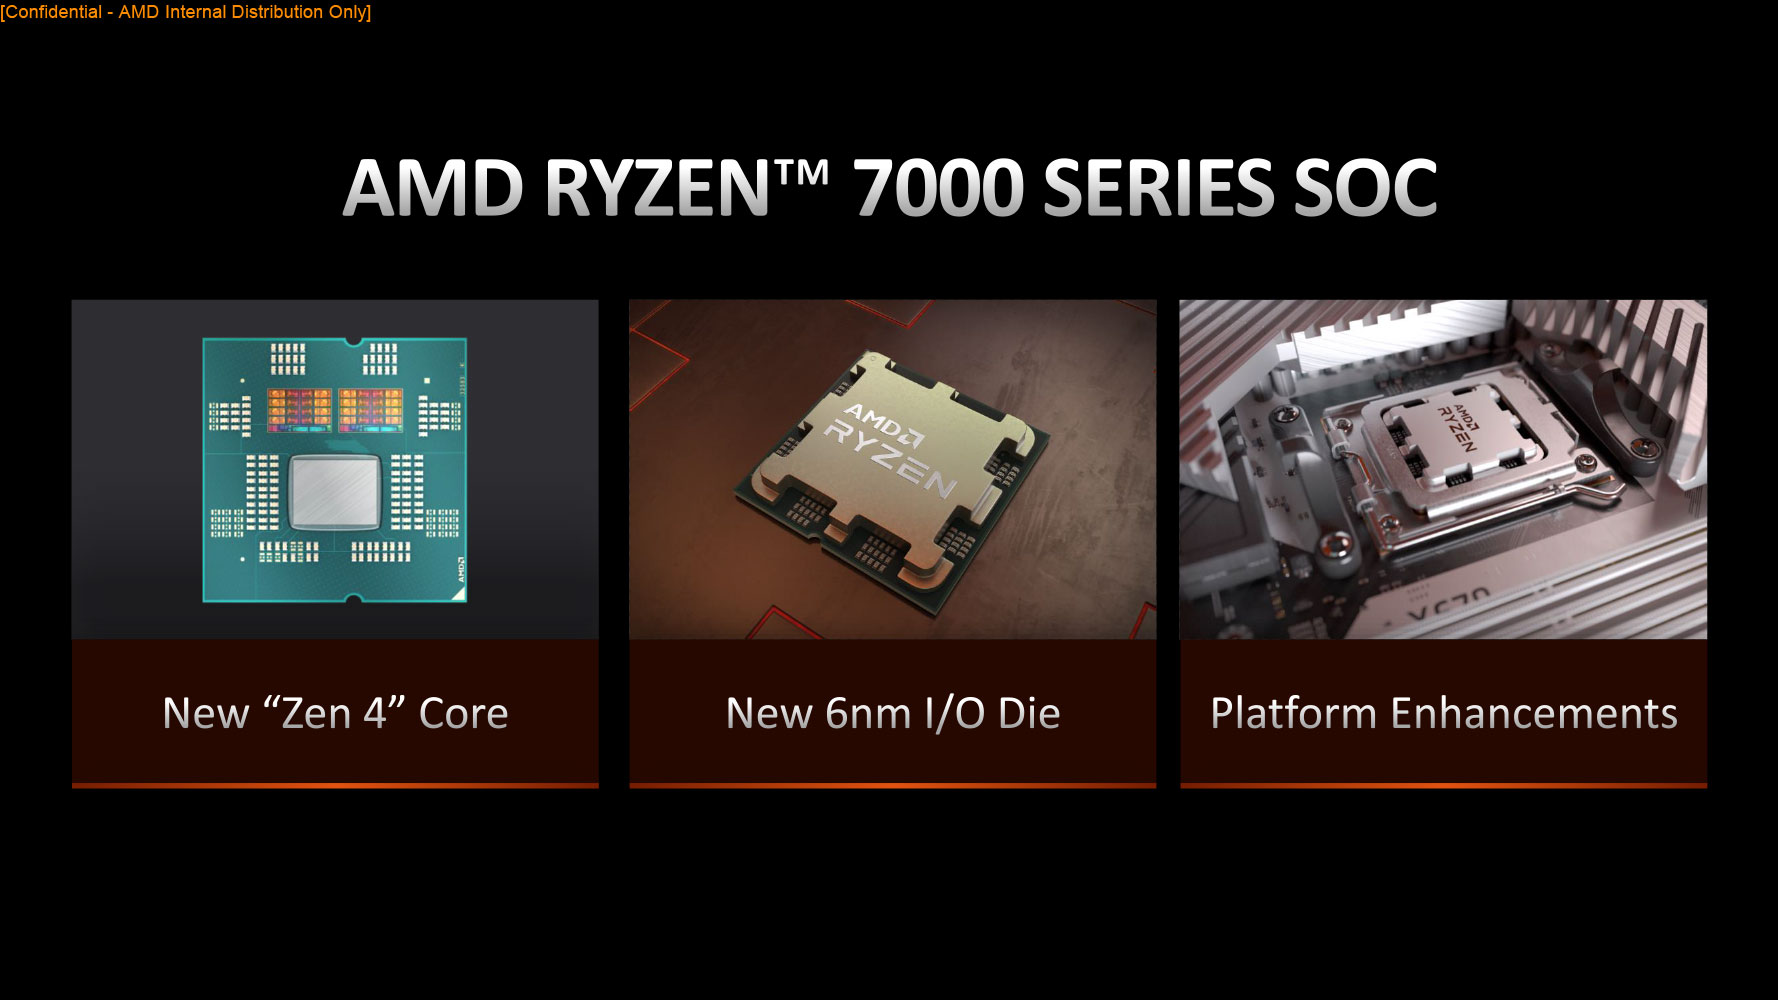 AMD Ryzen 9 7900X processor review (Page 10)